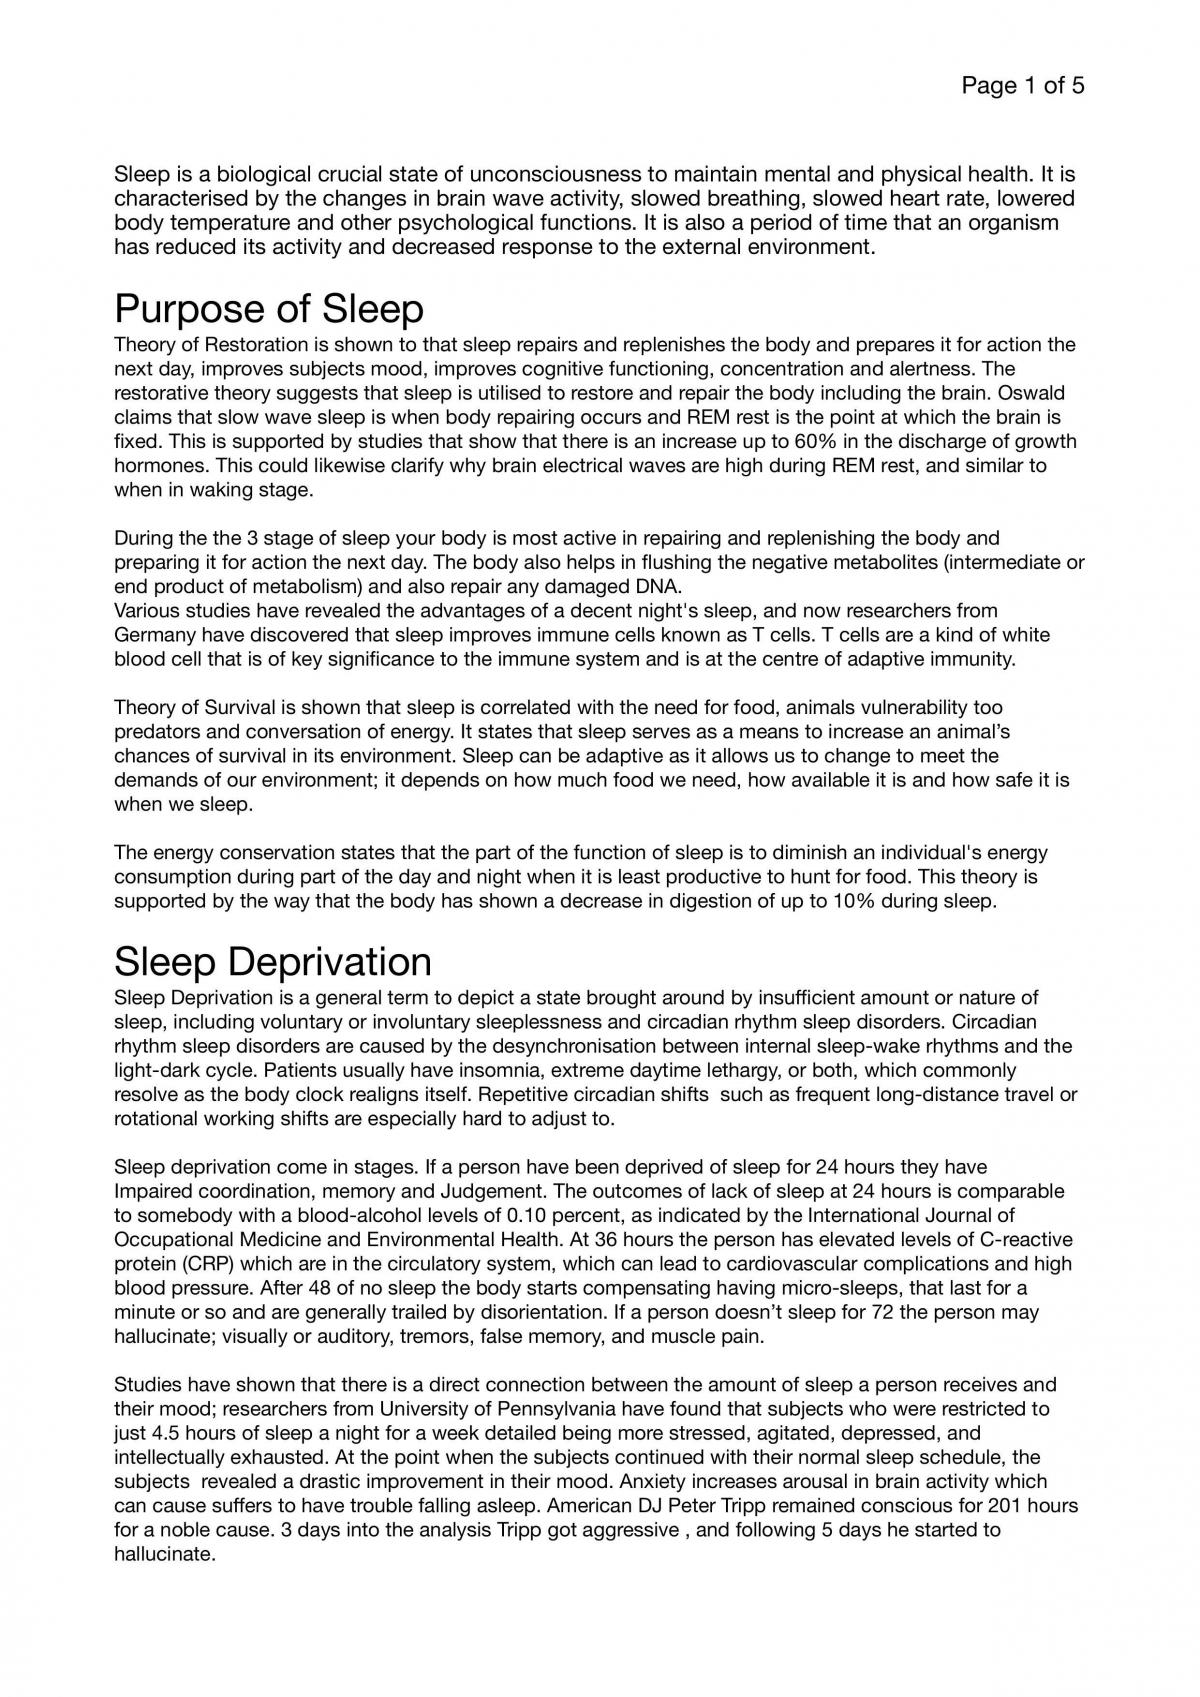 importance of sleep essay 200 words